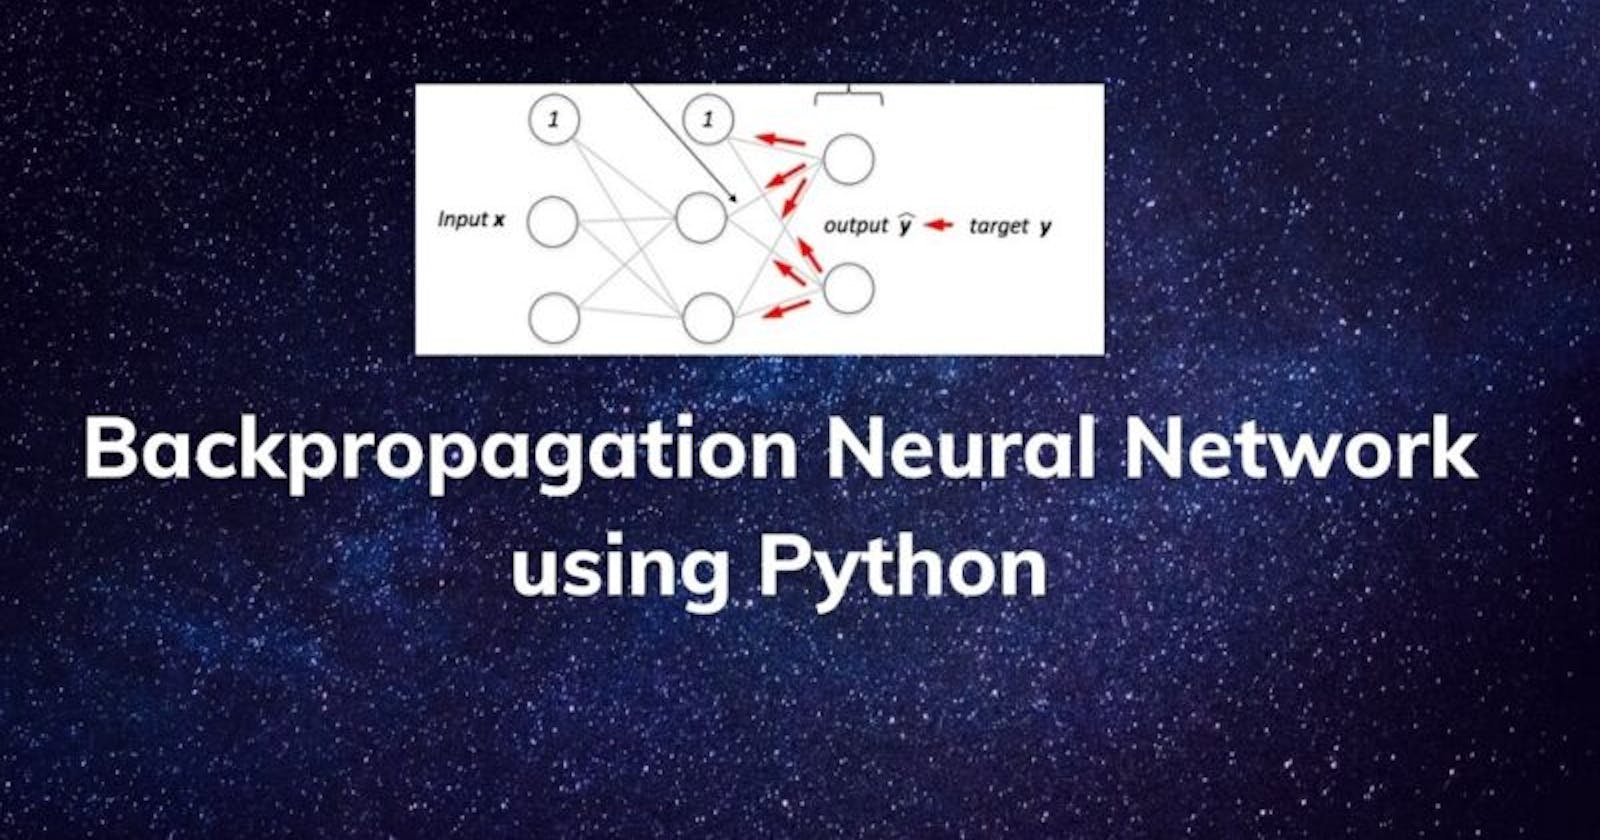 Backpropagation Network using Python